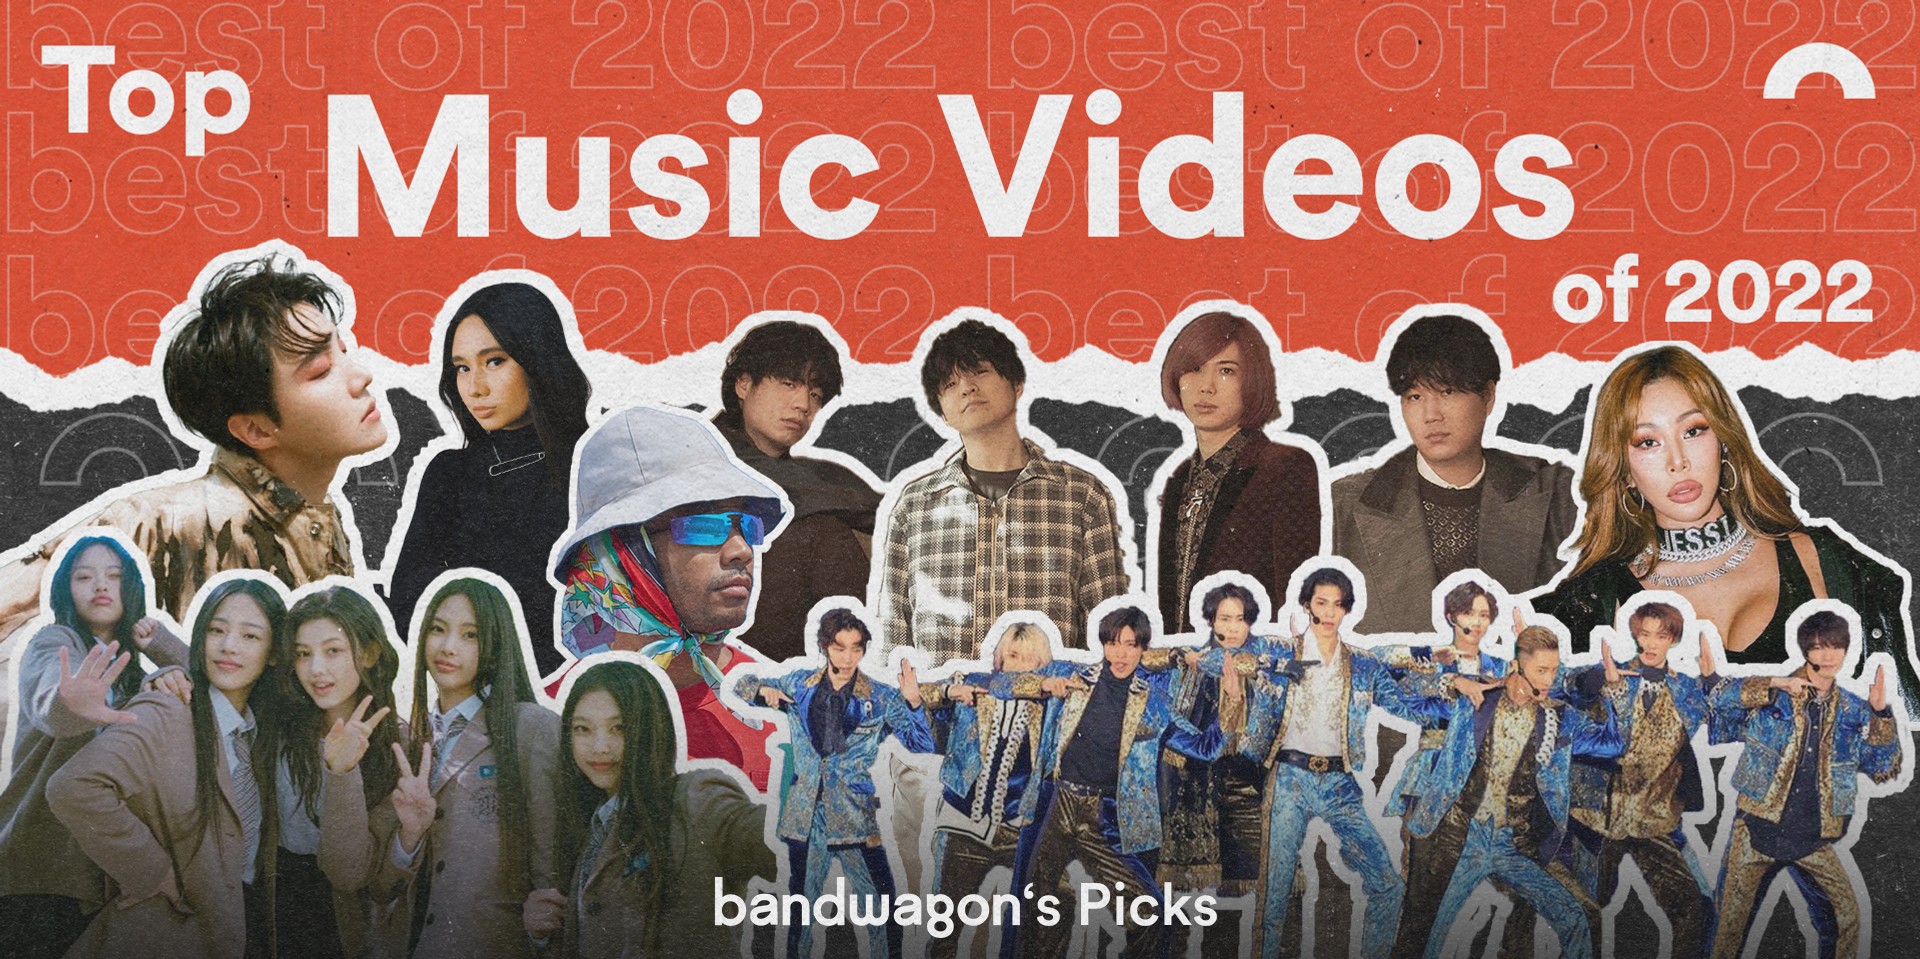 Top Music Videos of 2022: Bandwagon's Picks - j-hope, NIKI, NewJeans, Snow Man, Toro y Moi, BIBI, Harry Styles, and more